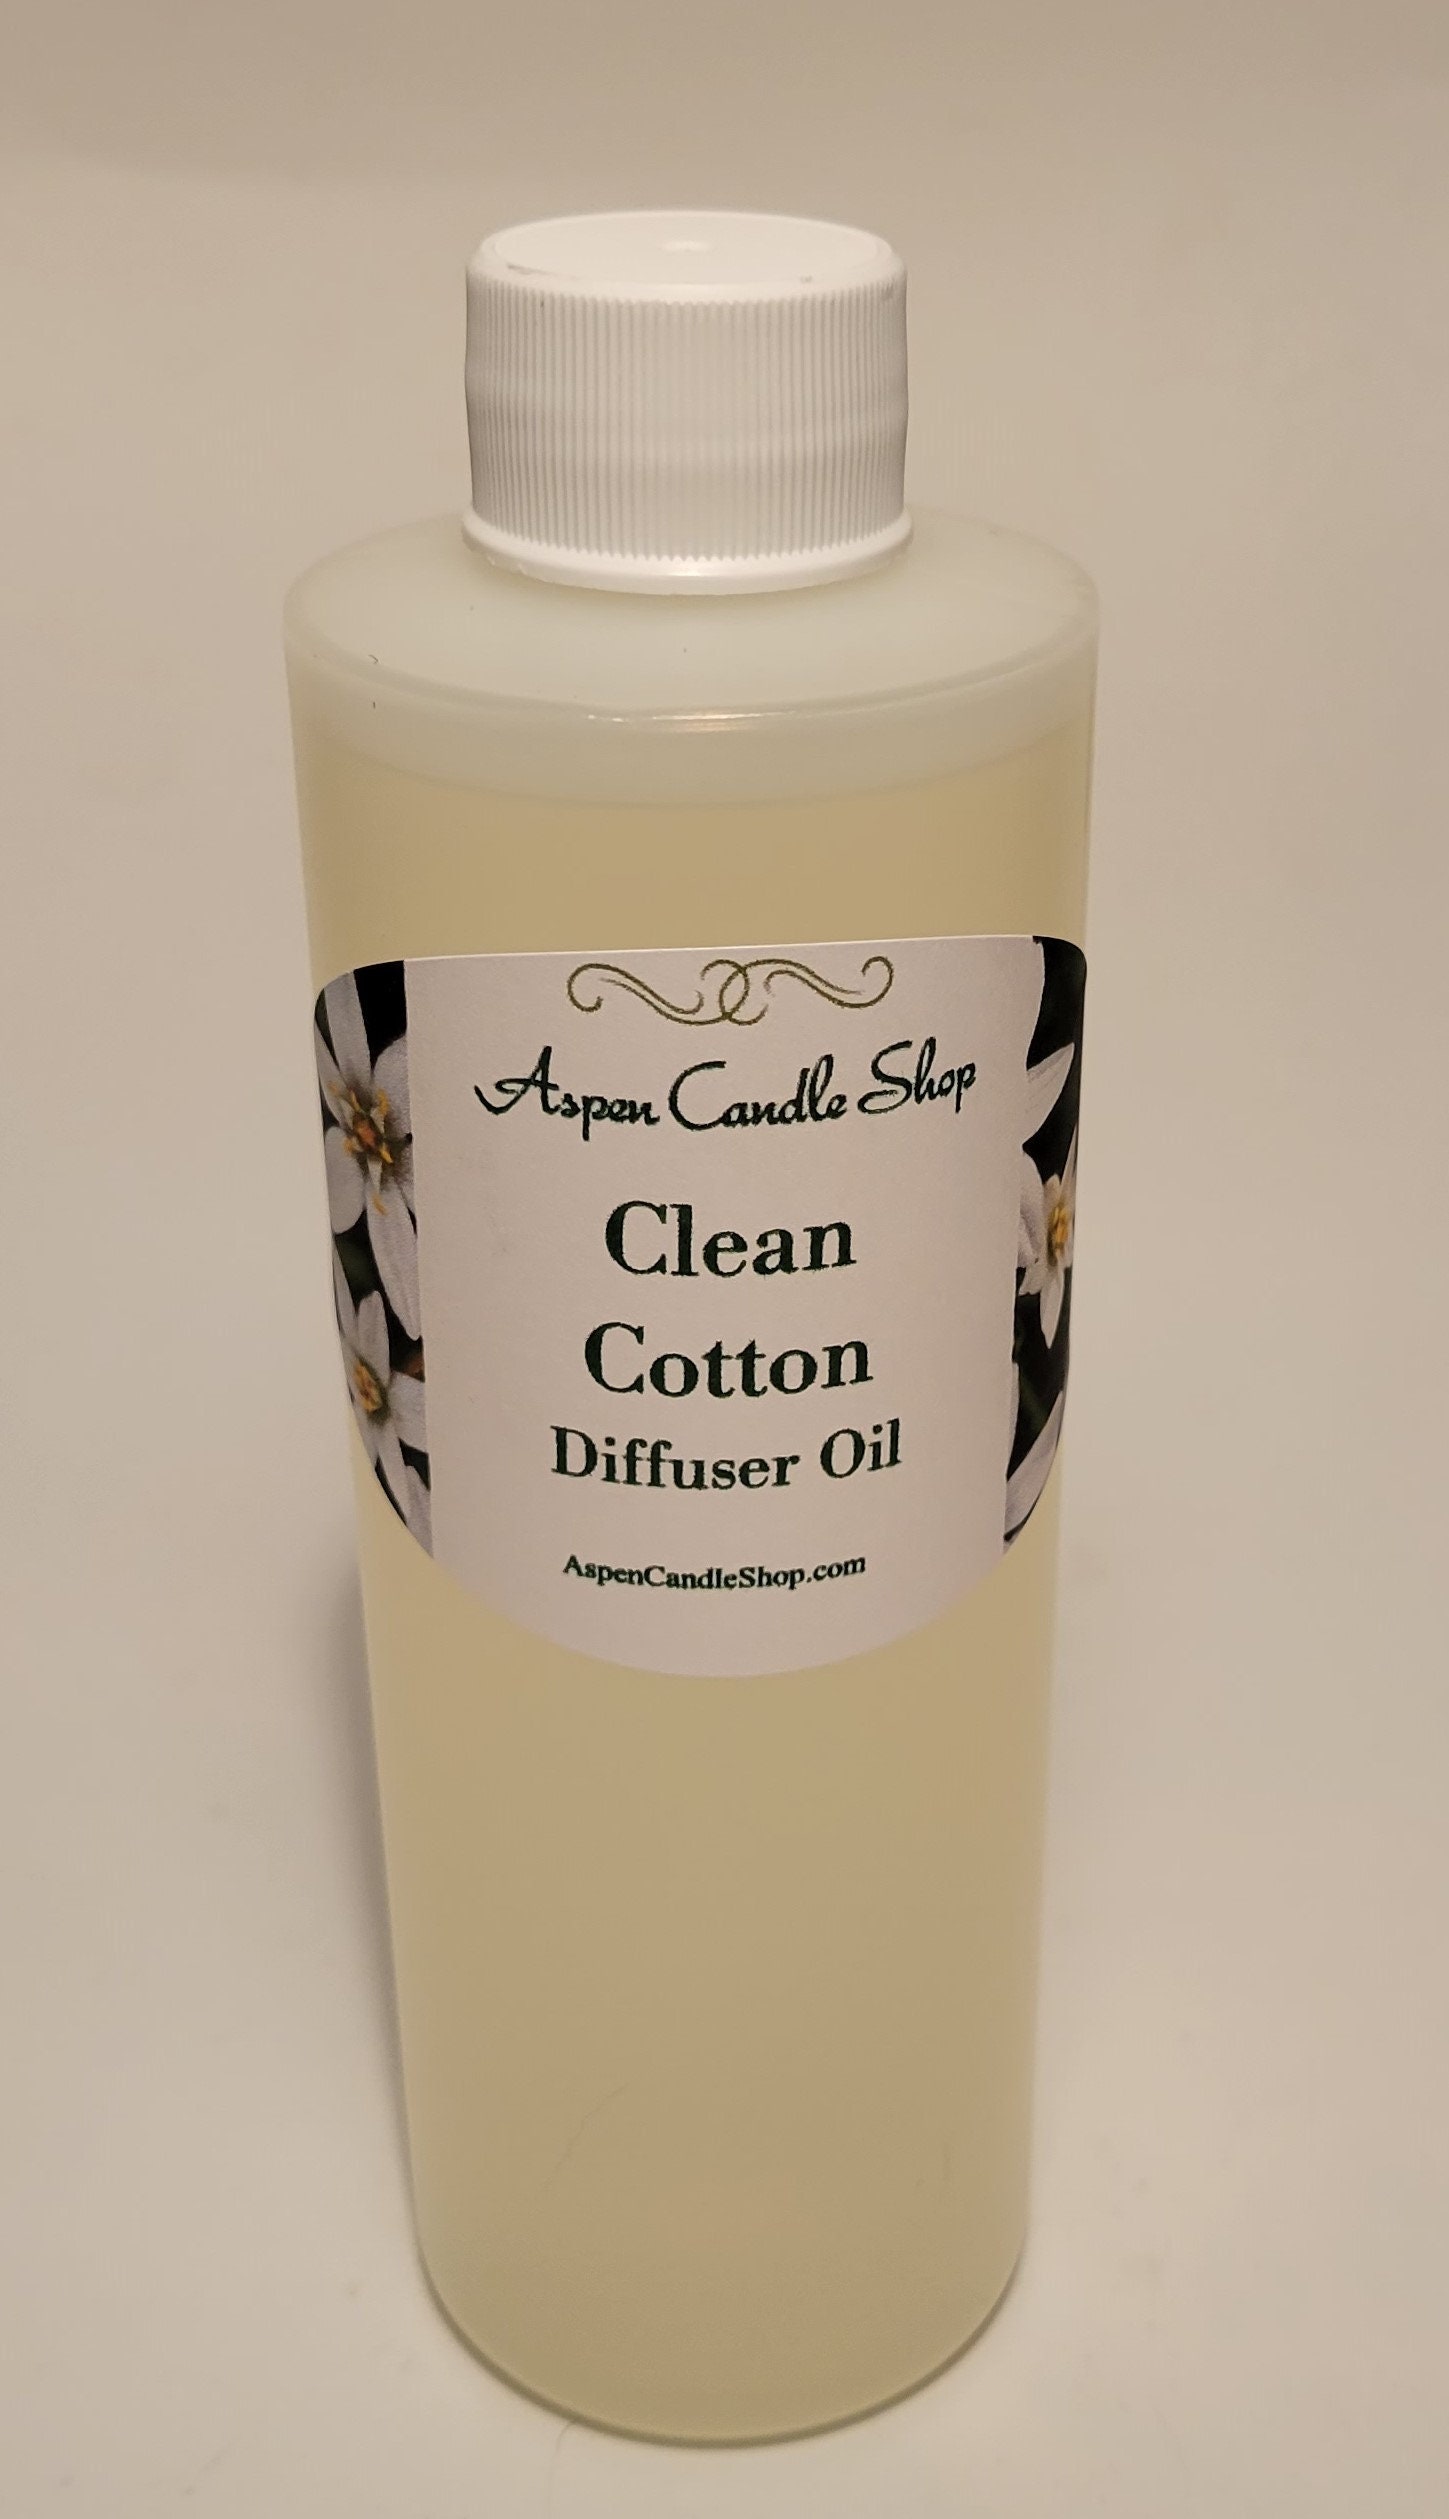 Clean Cotton Fragrance Oil 